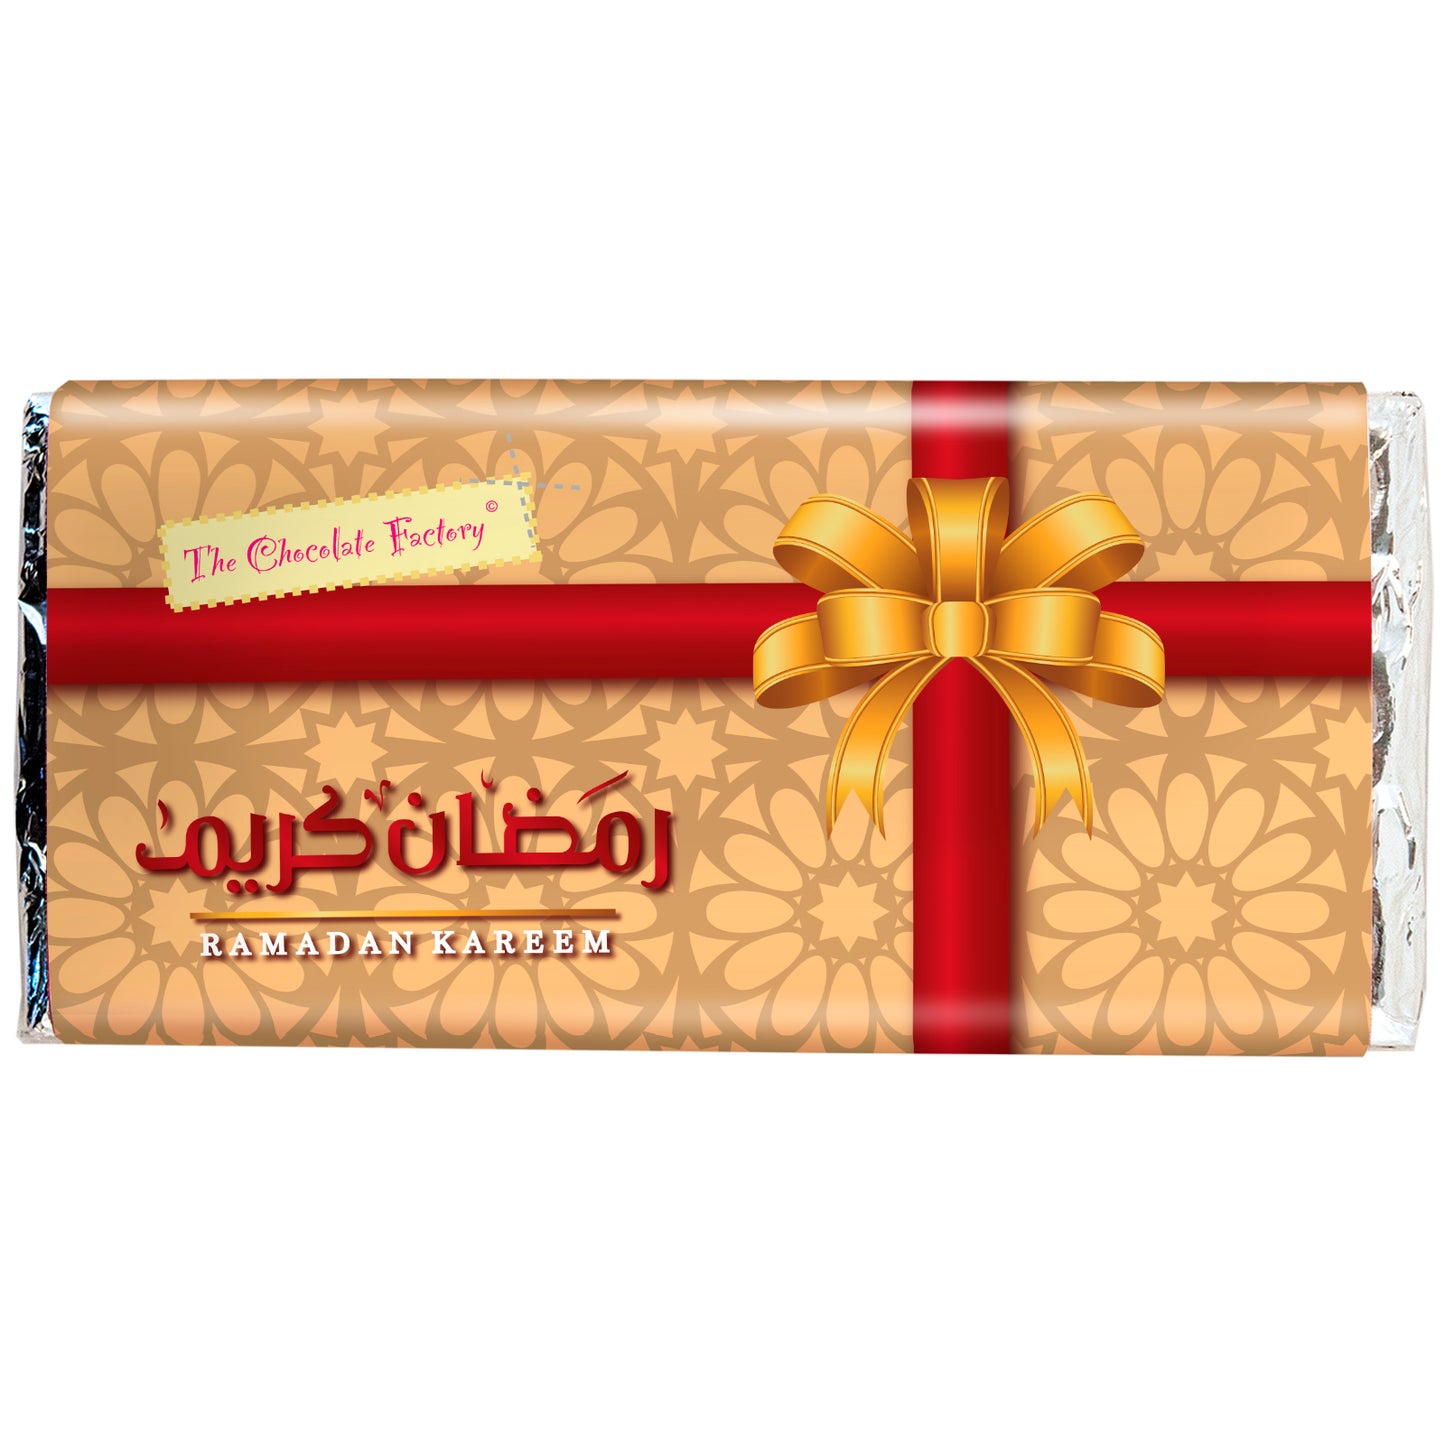 Bow and Flower Ramadan Solid Milk Chocolate 75g Bar